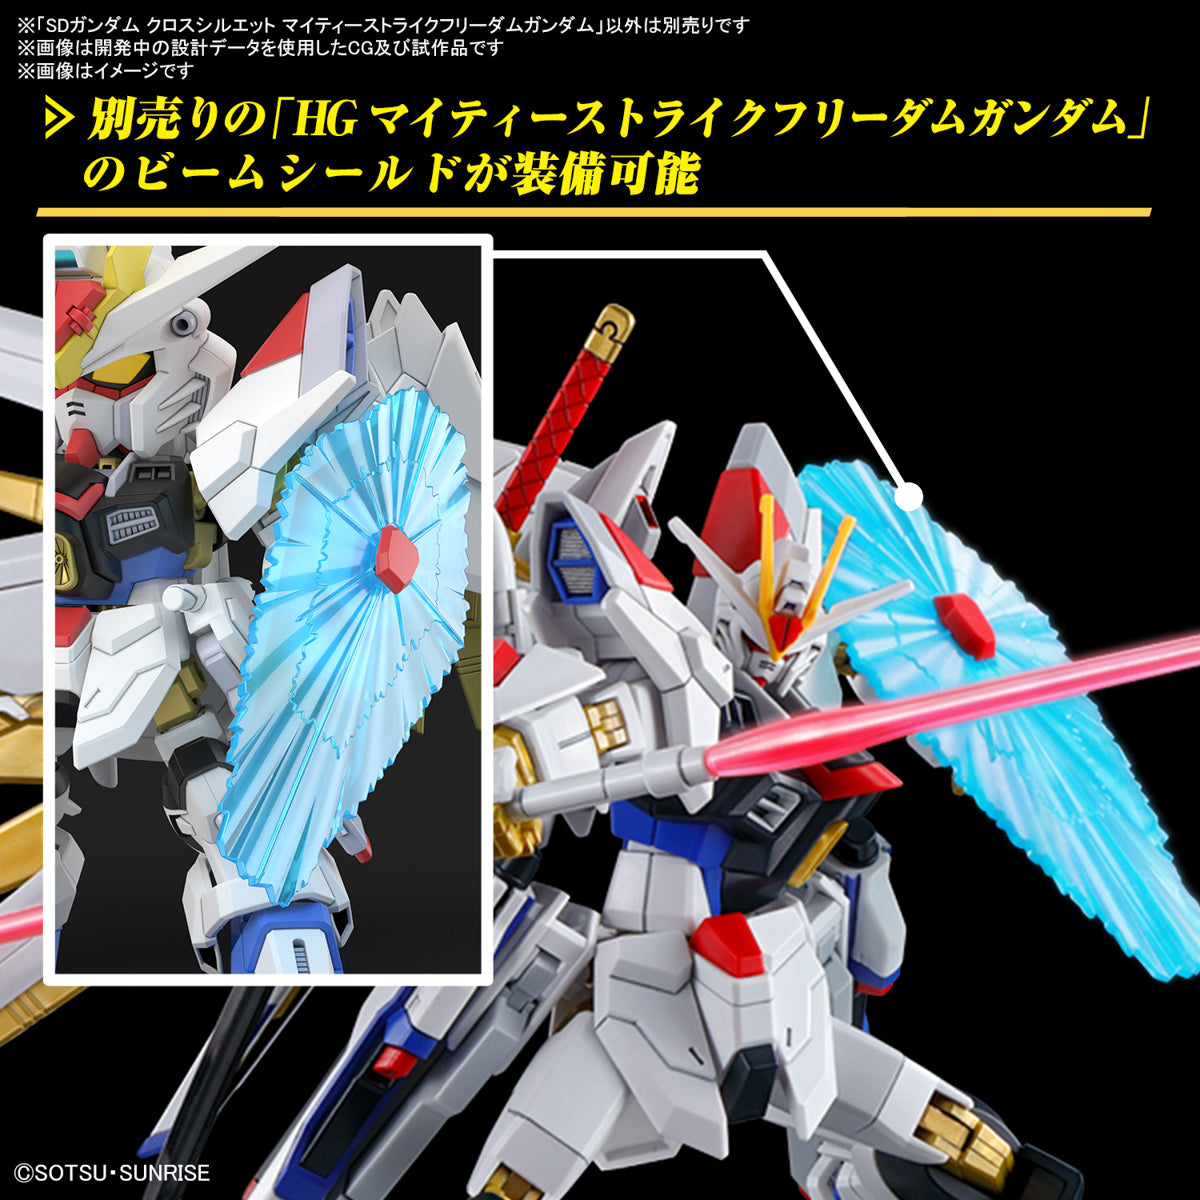 [PRE-ORDER] SD Gundam Cross Silhouette Mighty Strike Freedom Gundam